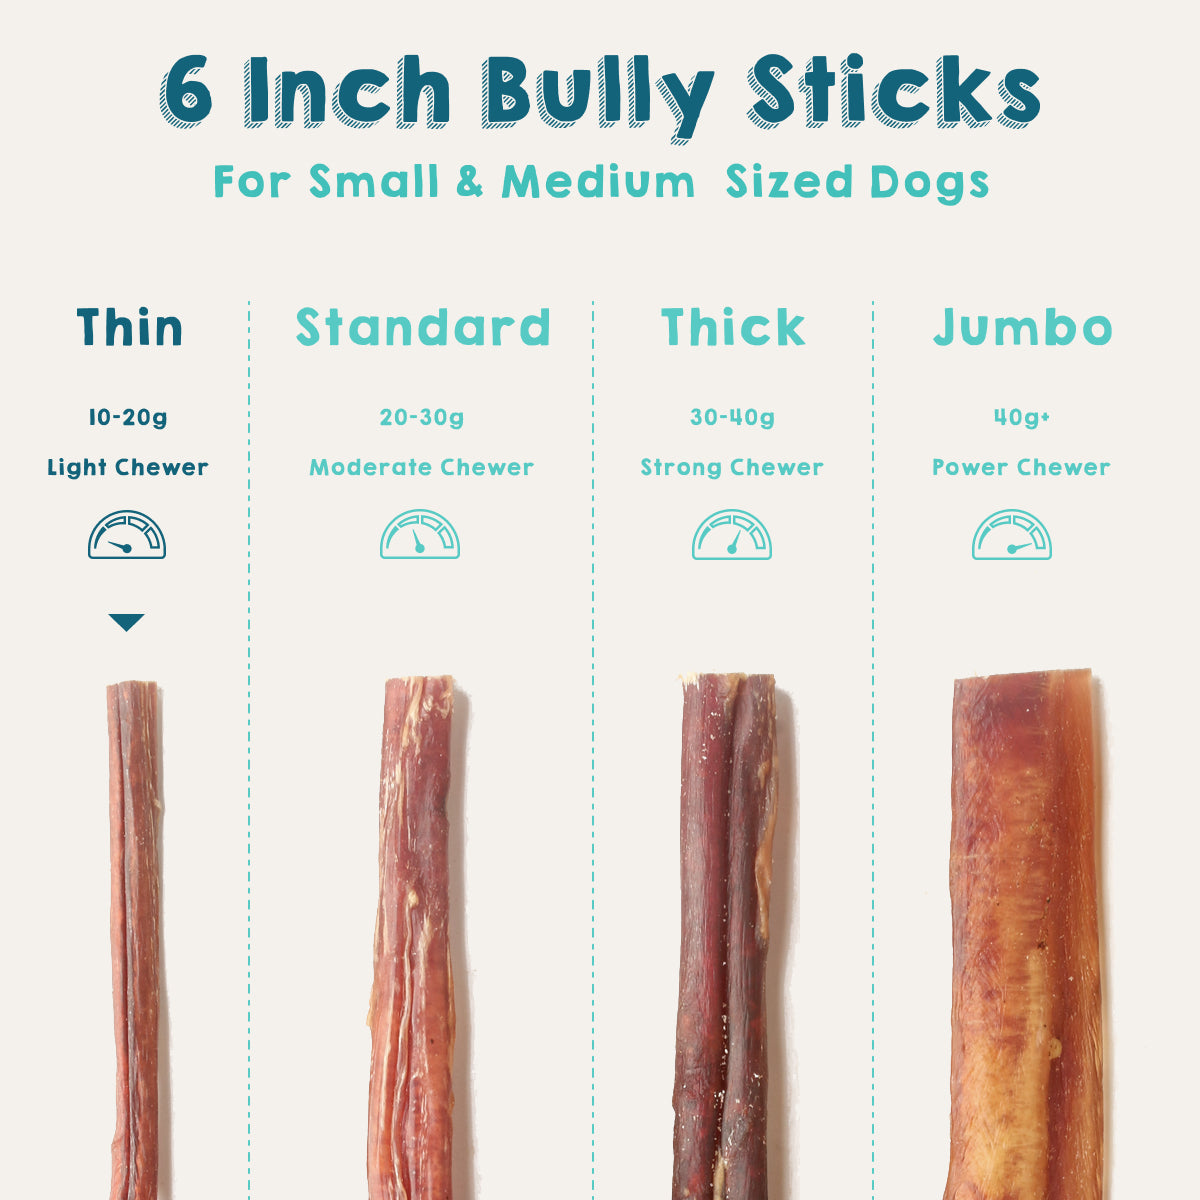 6 Inch Bully Sticks - Thin - Odor-Free